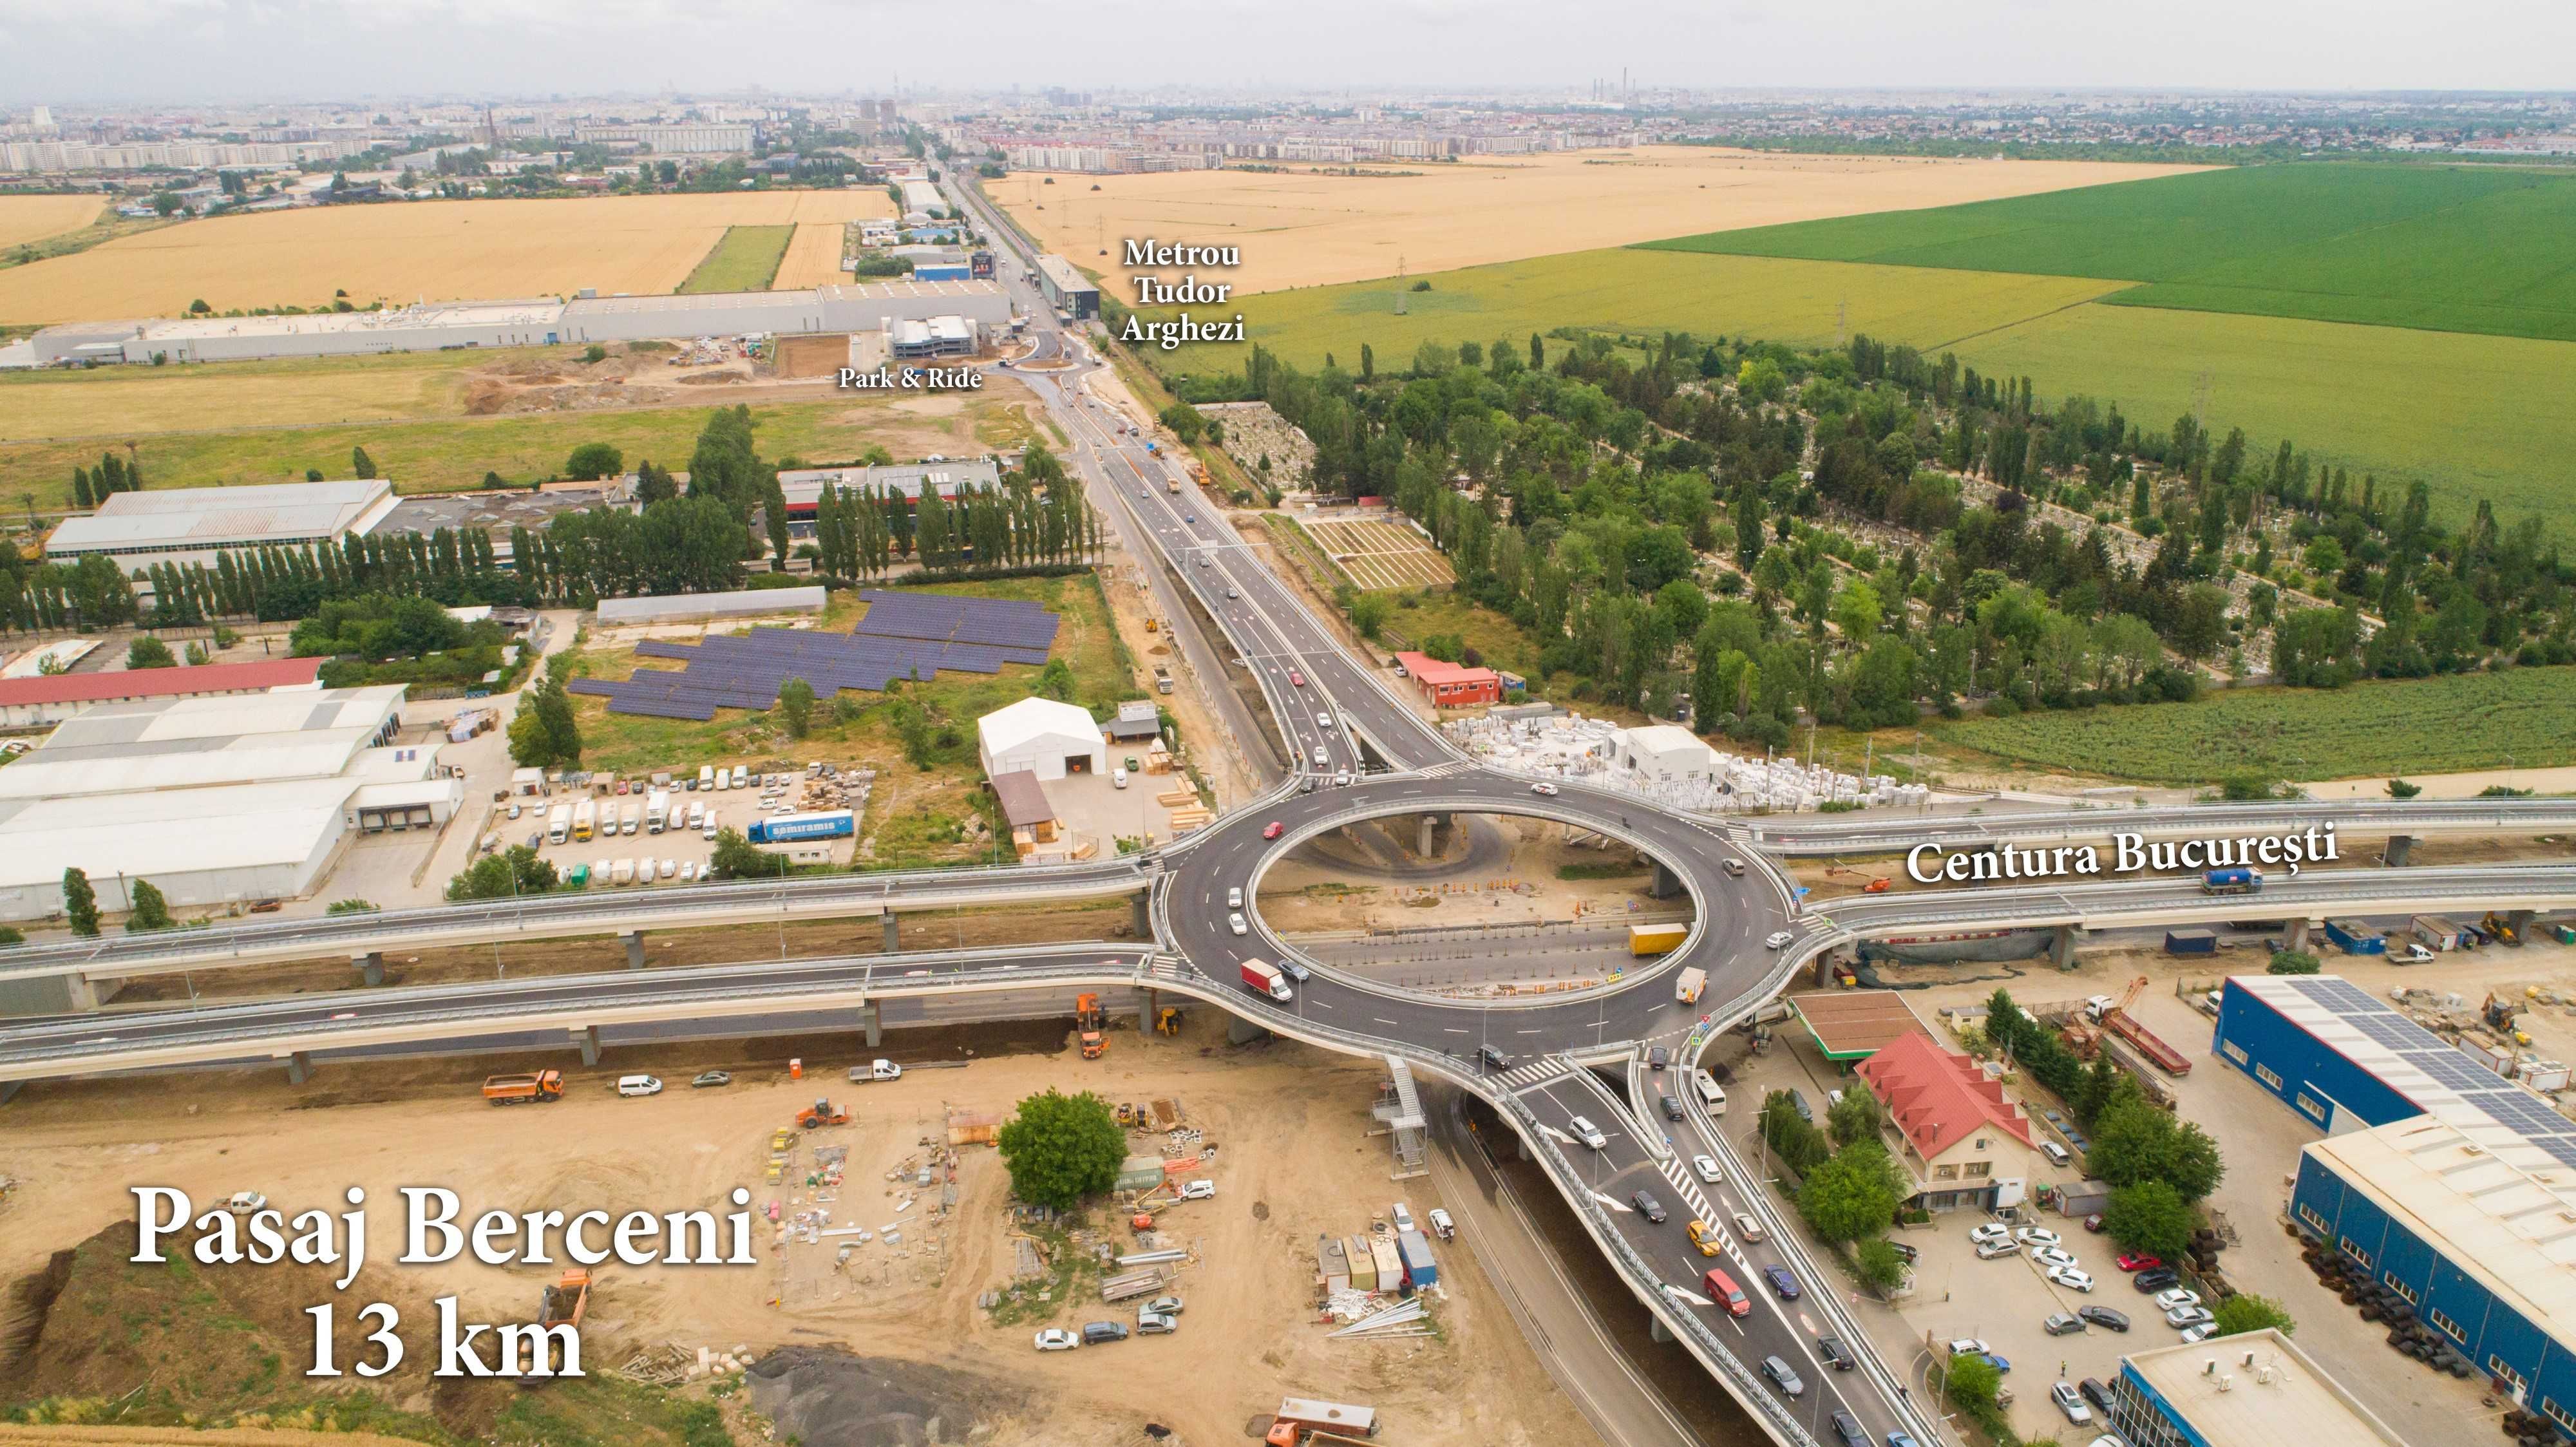 Teren construibil Dobreni 5000 mp situat la 14 km de Metrou